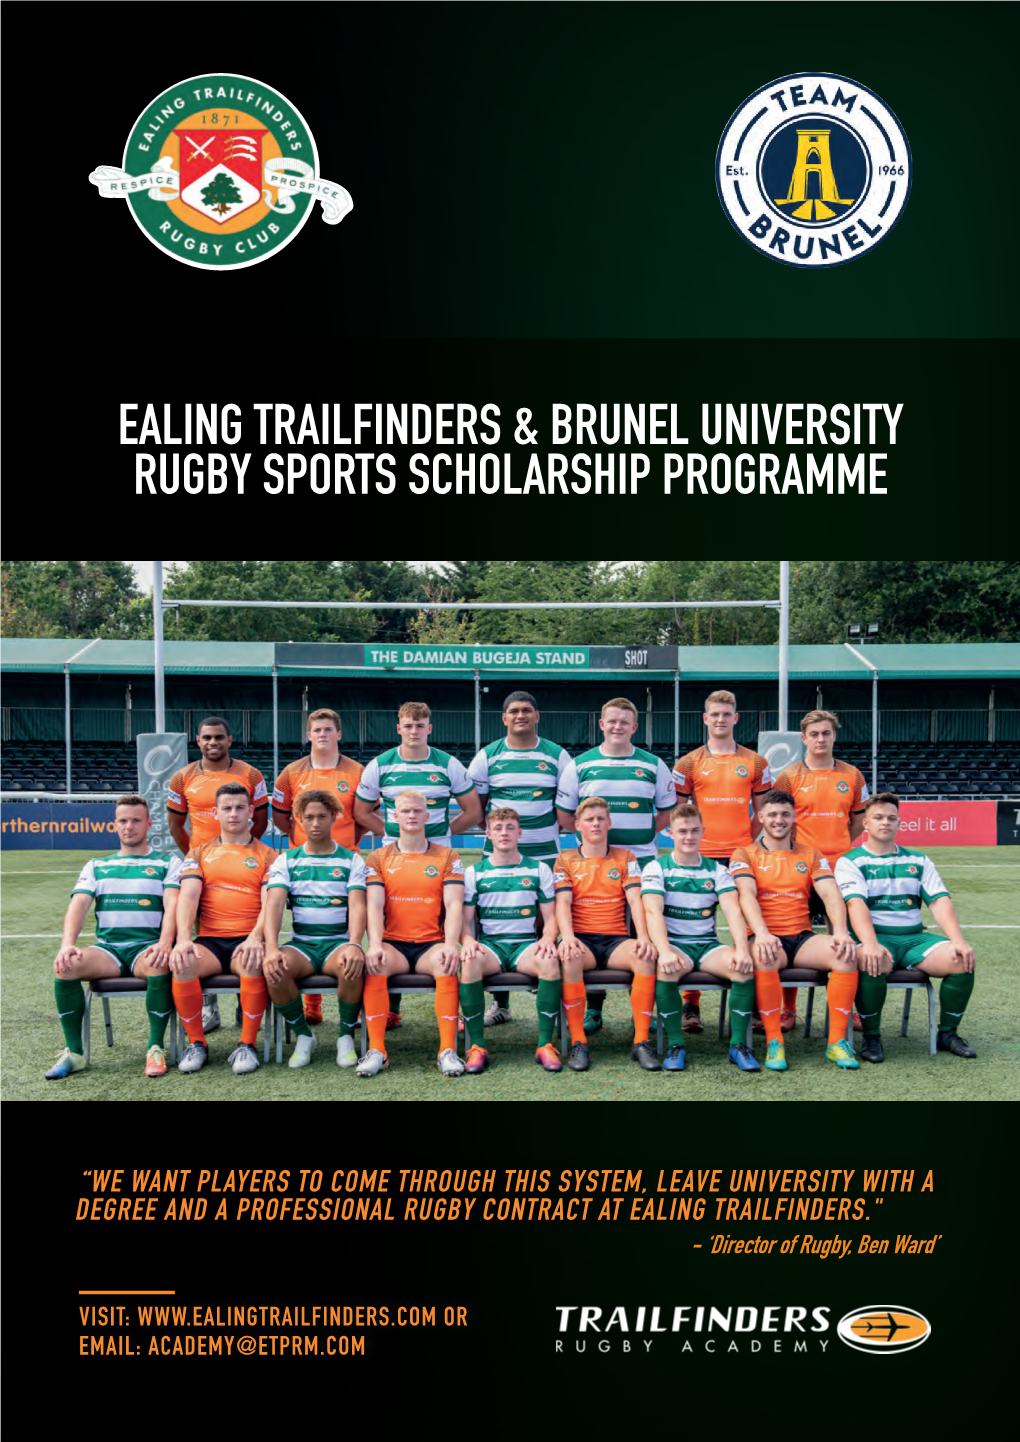 Ealing Trailfinders & Brunel University Rugby Sports Scholarship Programme